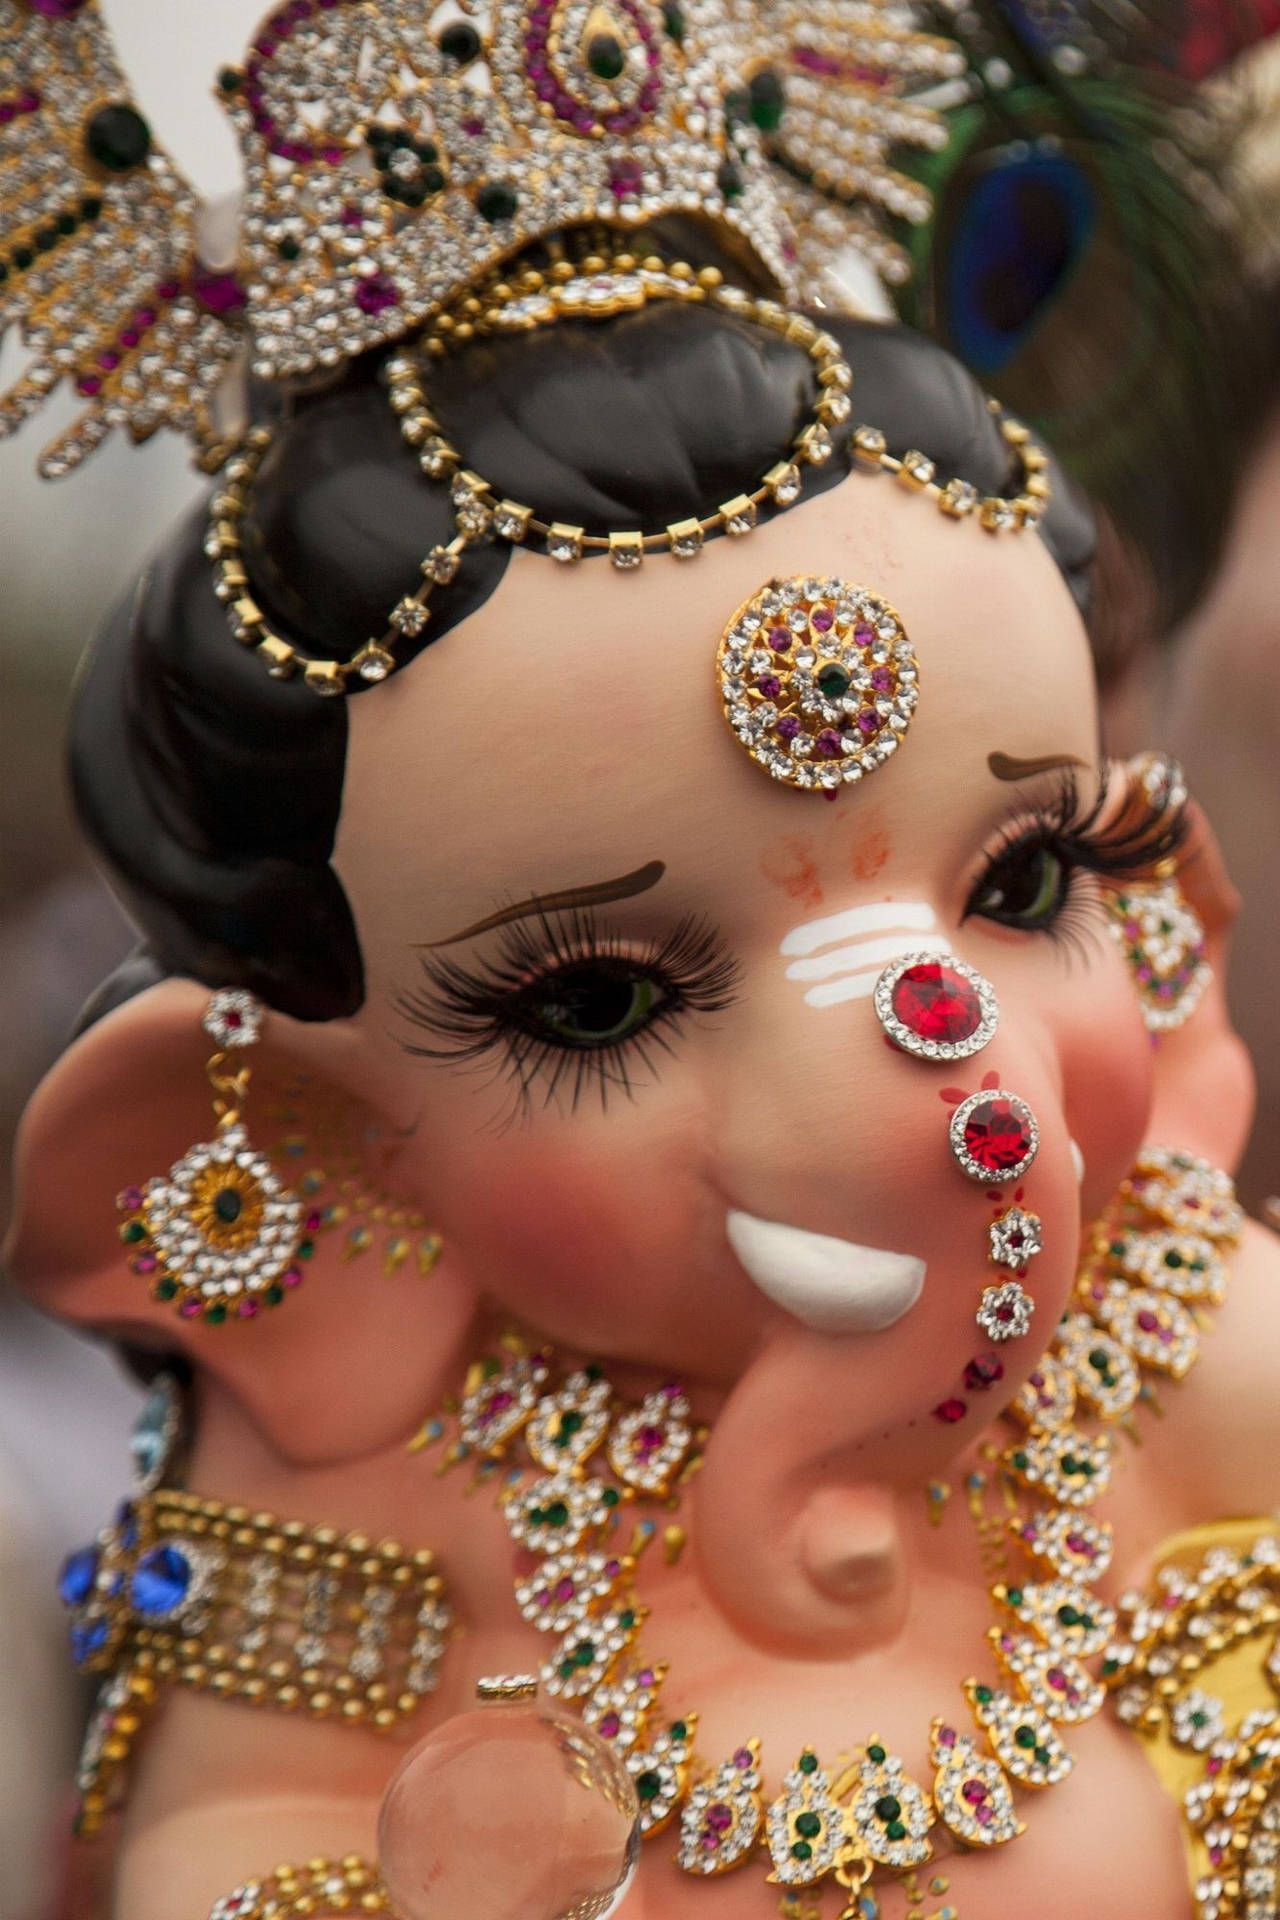 Baby Ganesh Crystal Ornaments